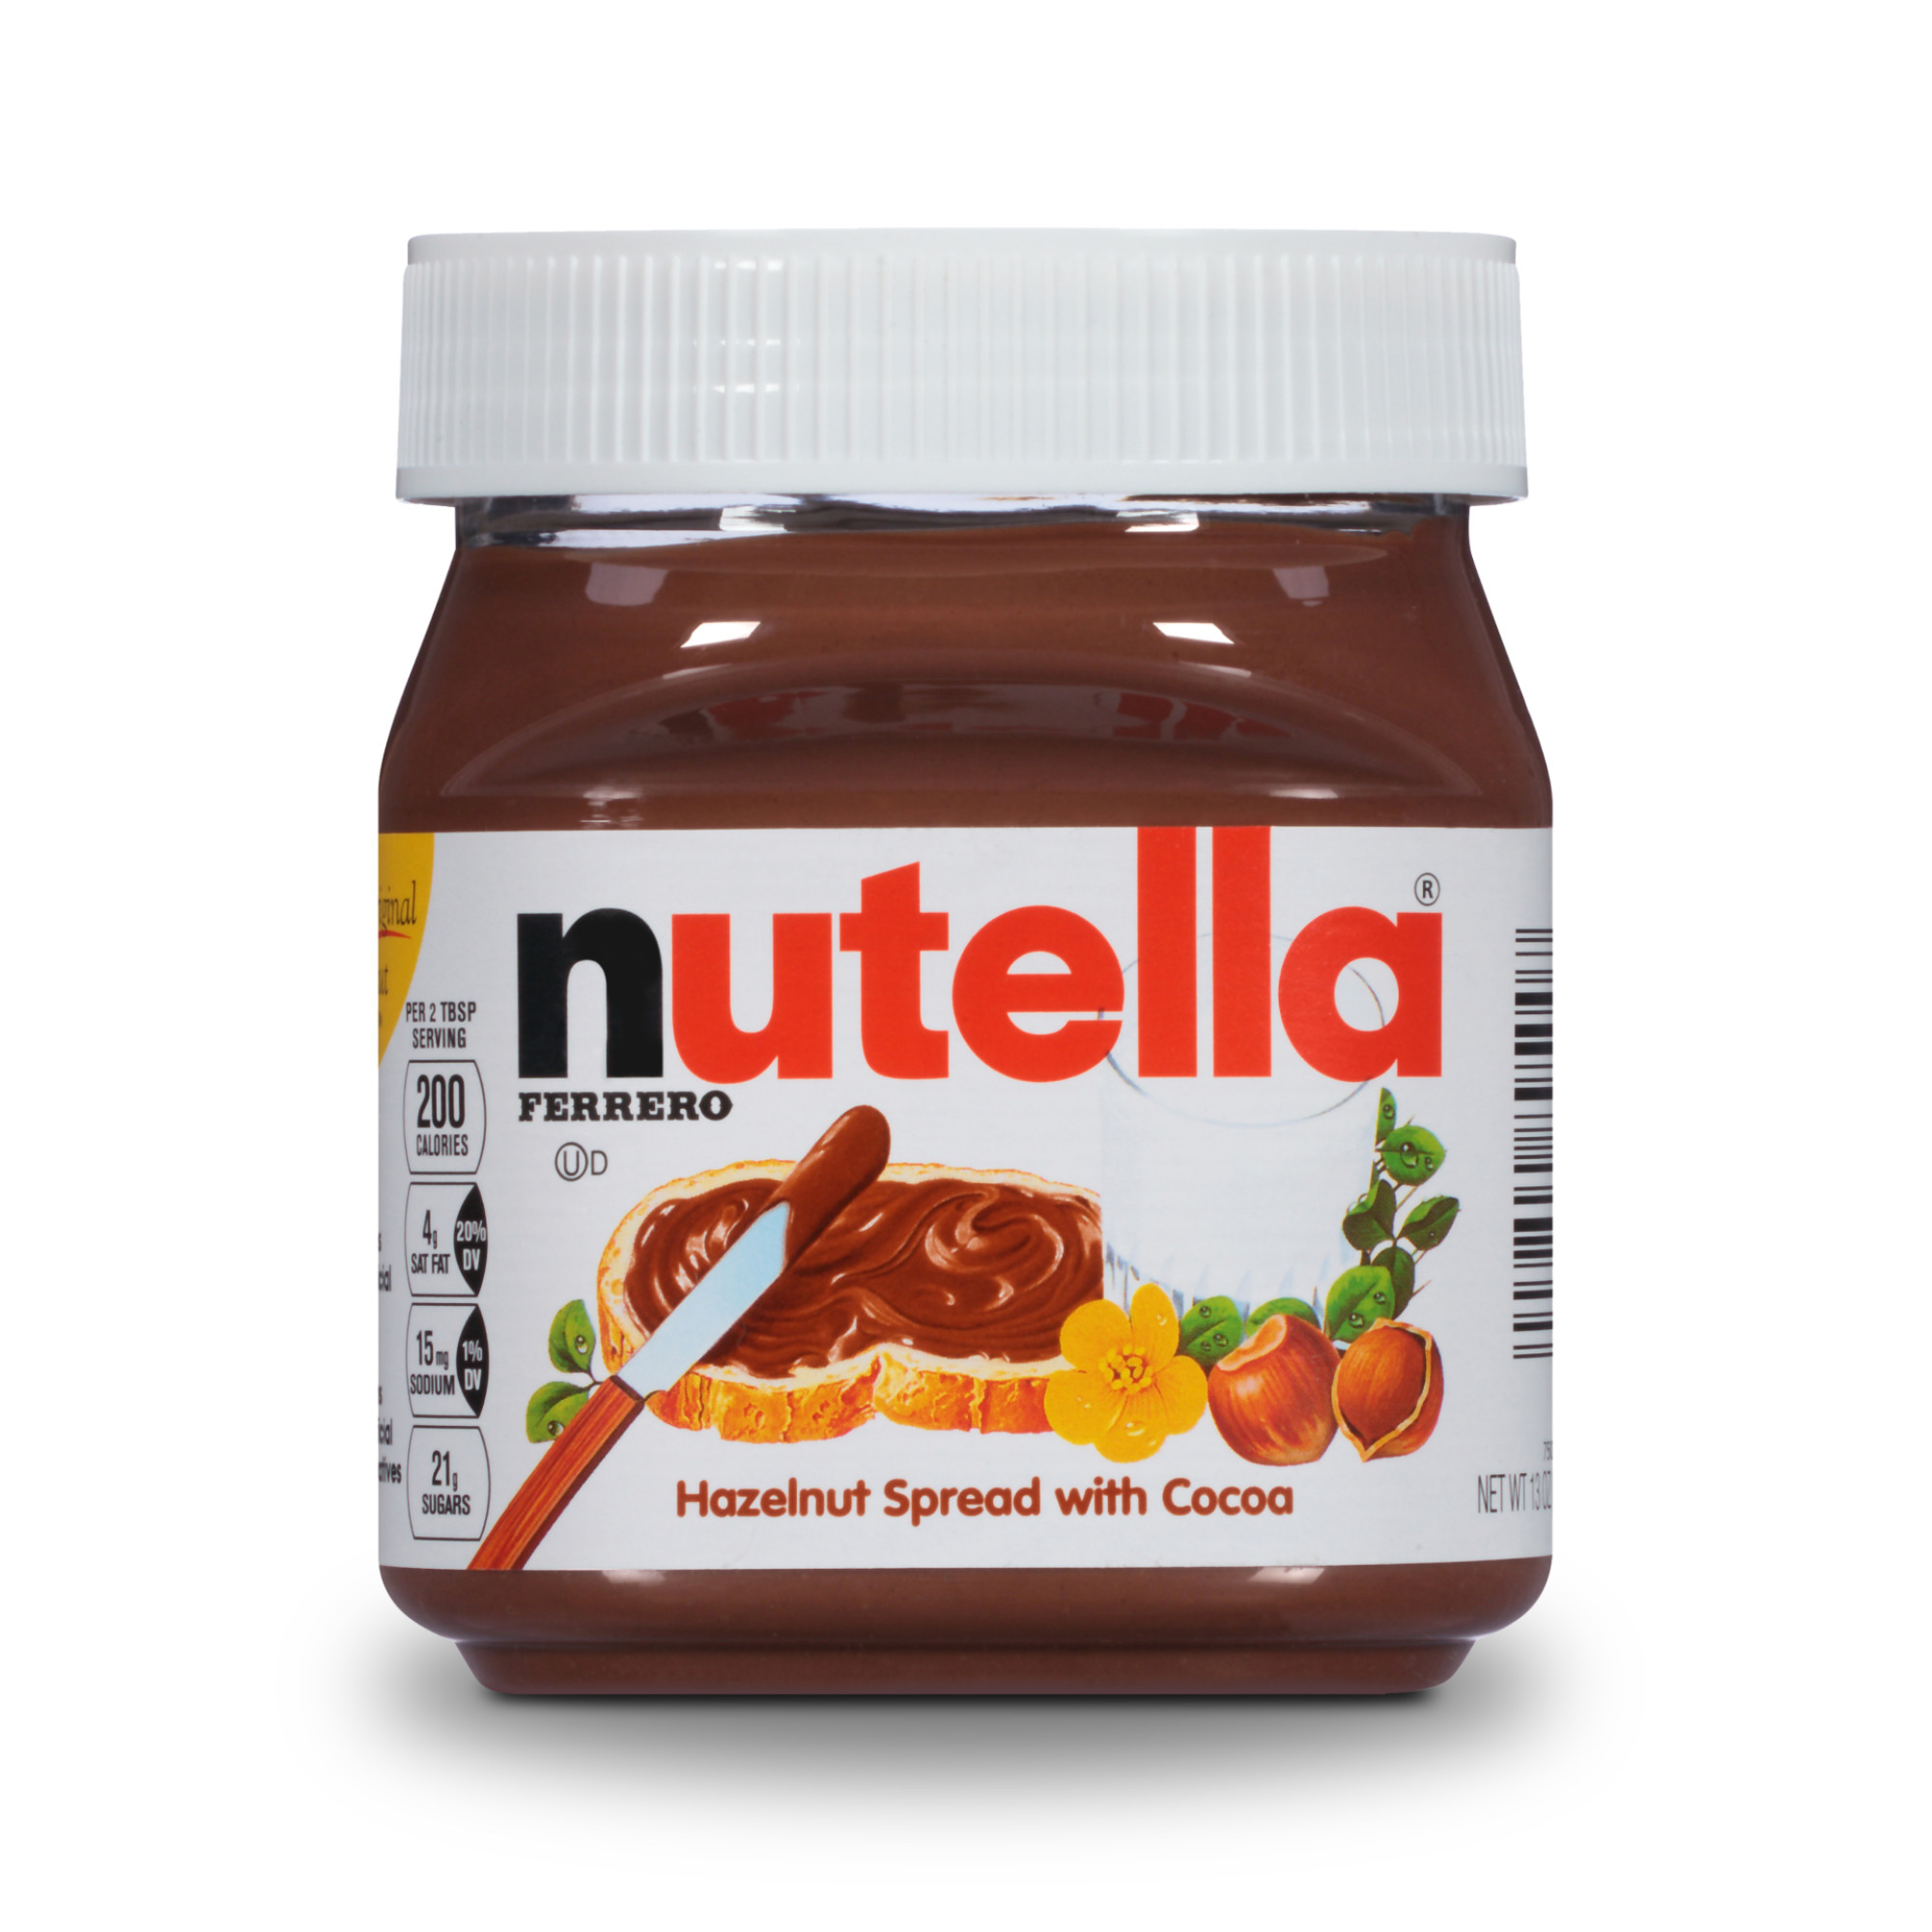 Nutella Hazelnut Spread with Cocoa for Breakfast, 13 oz Jar - image 1 of 8